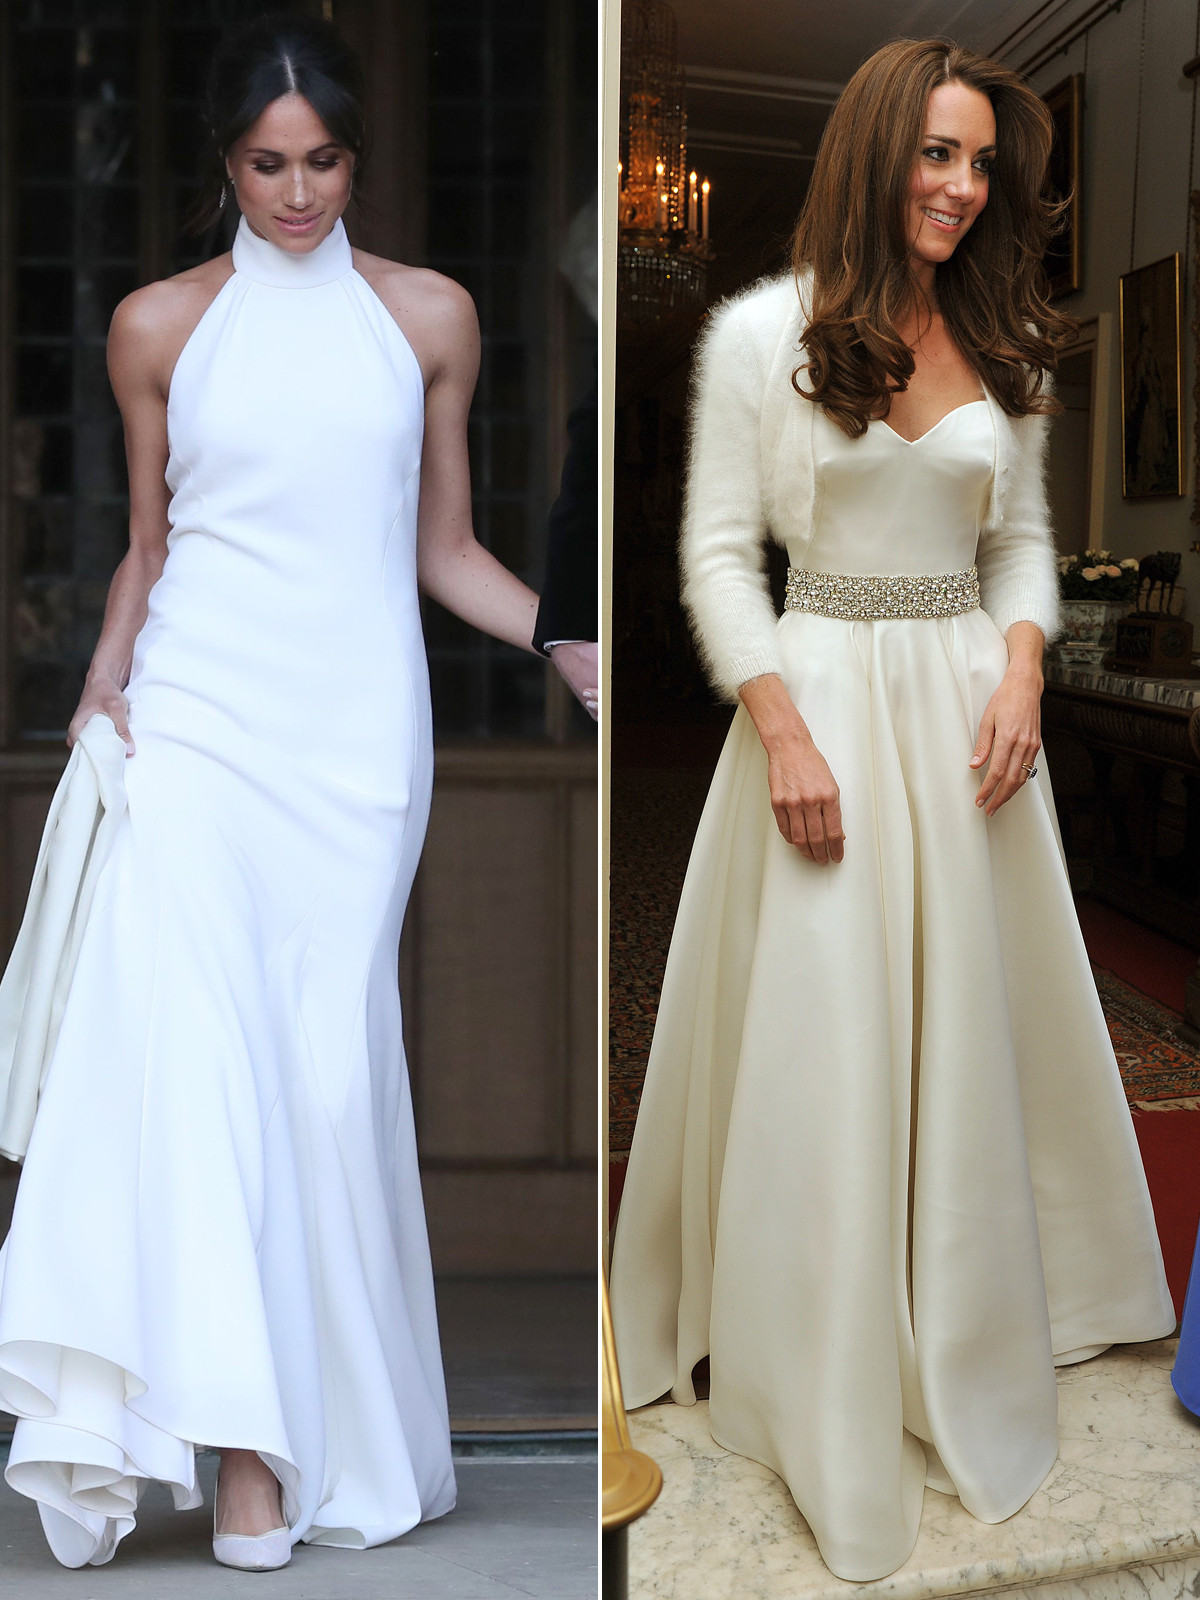 Wedding Reception Dress
 Kate Middleton s 2011 Reception Dress Next to Meghan